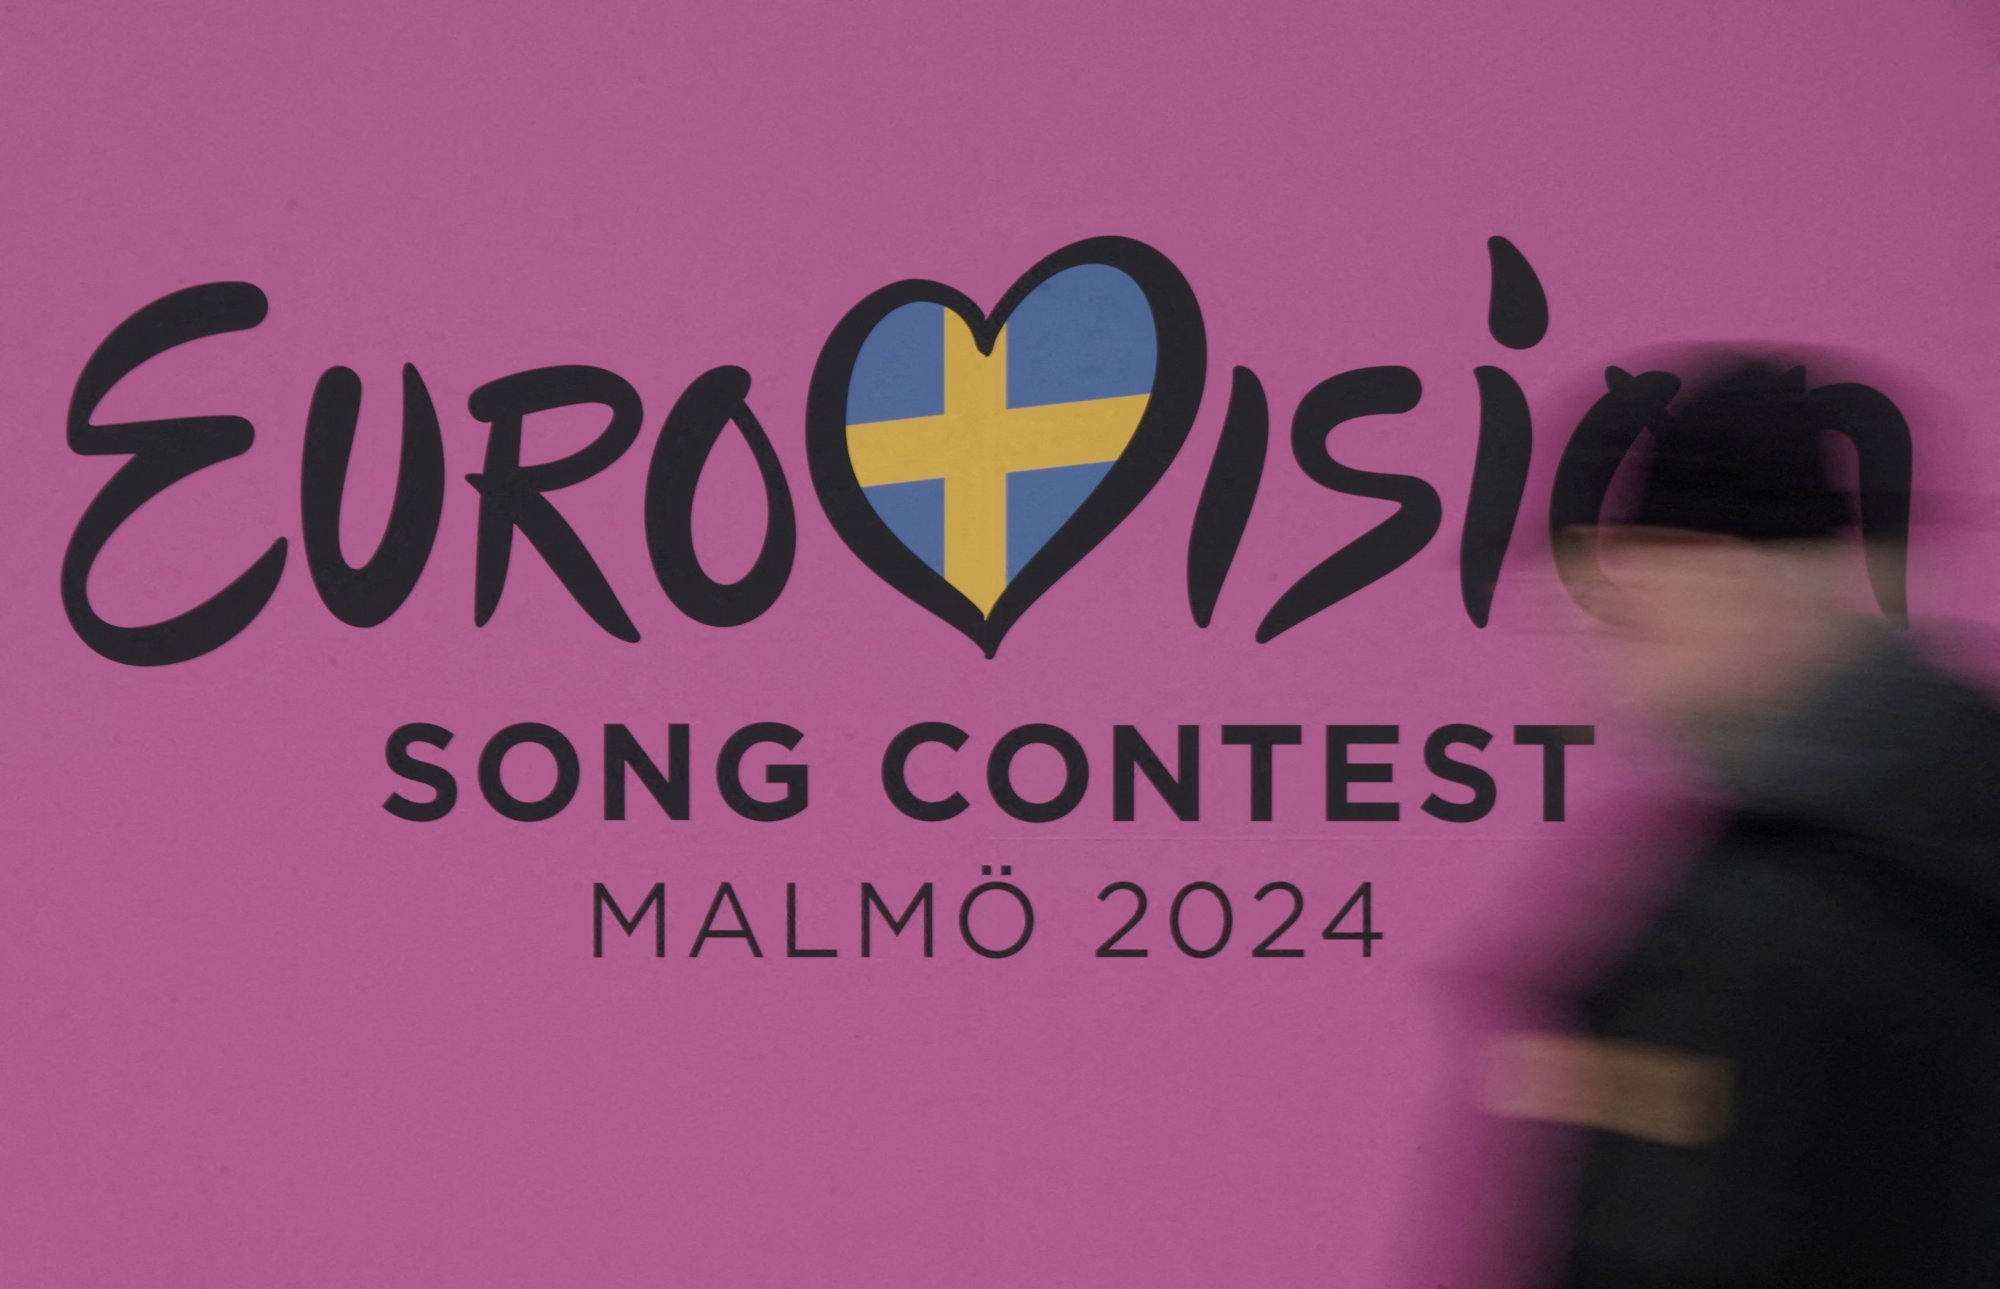 Eurovision 2024: Τα 5 φαβορί για τη νίκη και το παράδοξο με τη Μαρίνα Σάττι